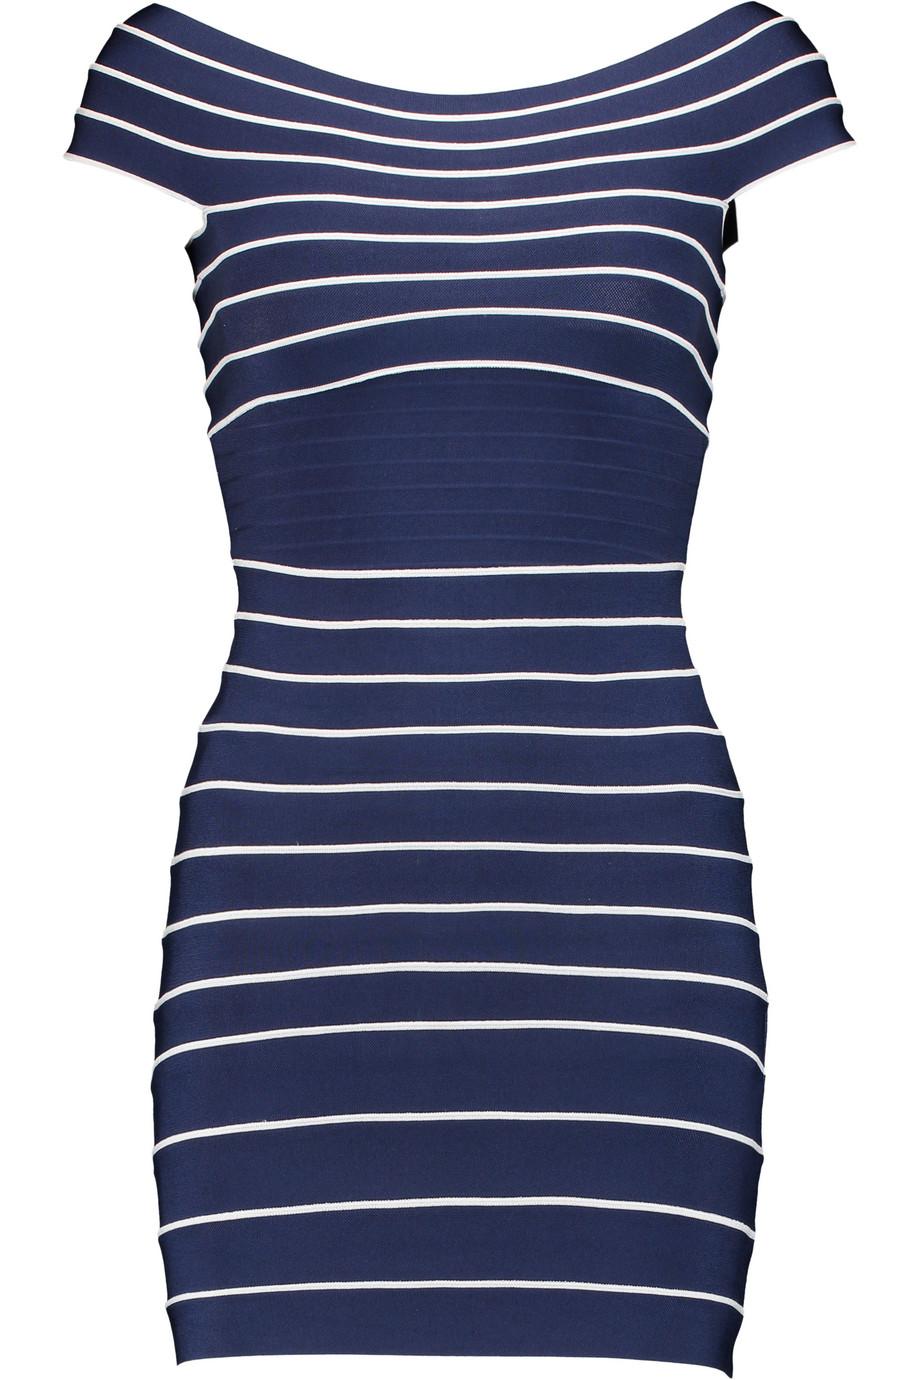 HERVE LEGER Striped Bandage Mini Dress, Navy | ModeSens